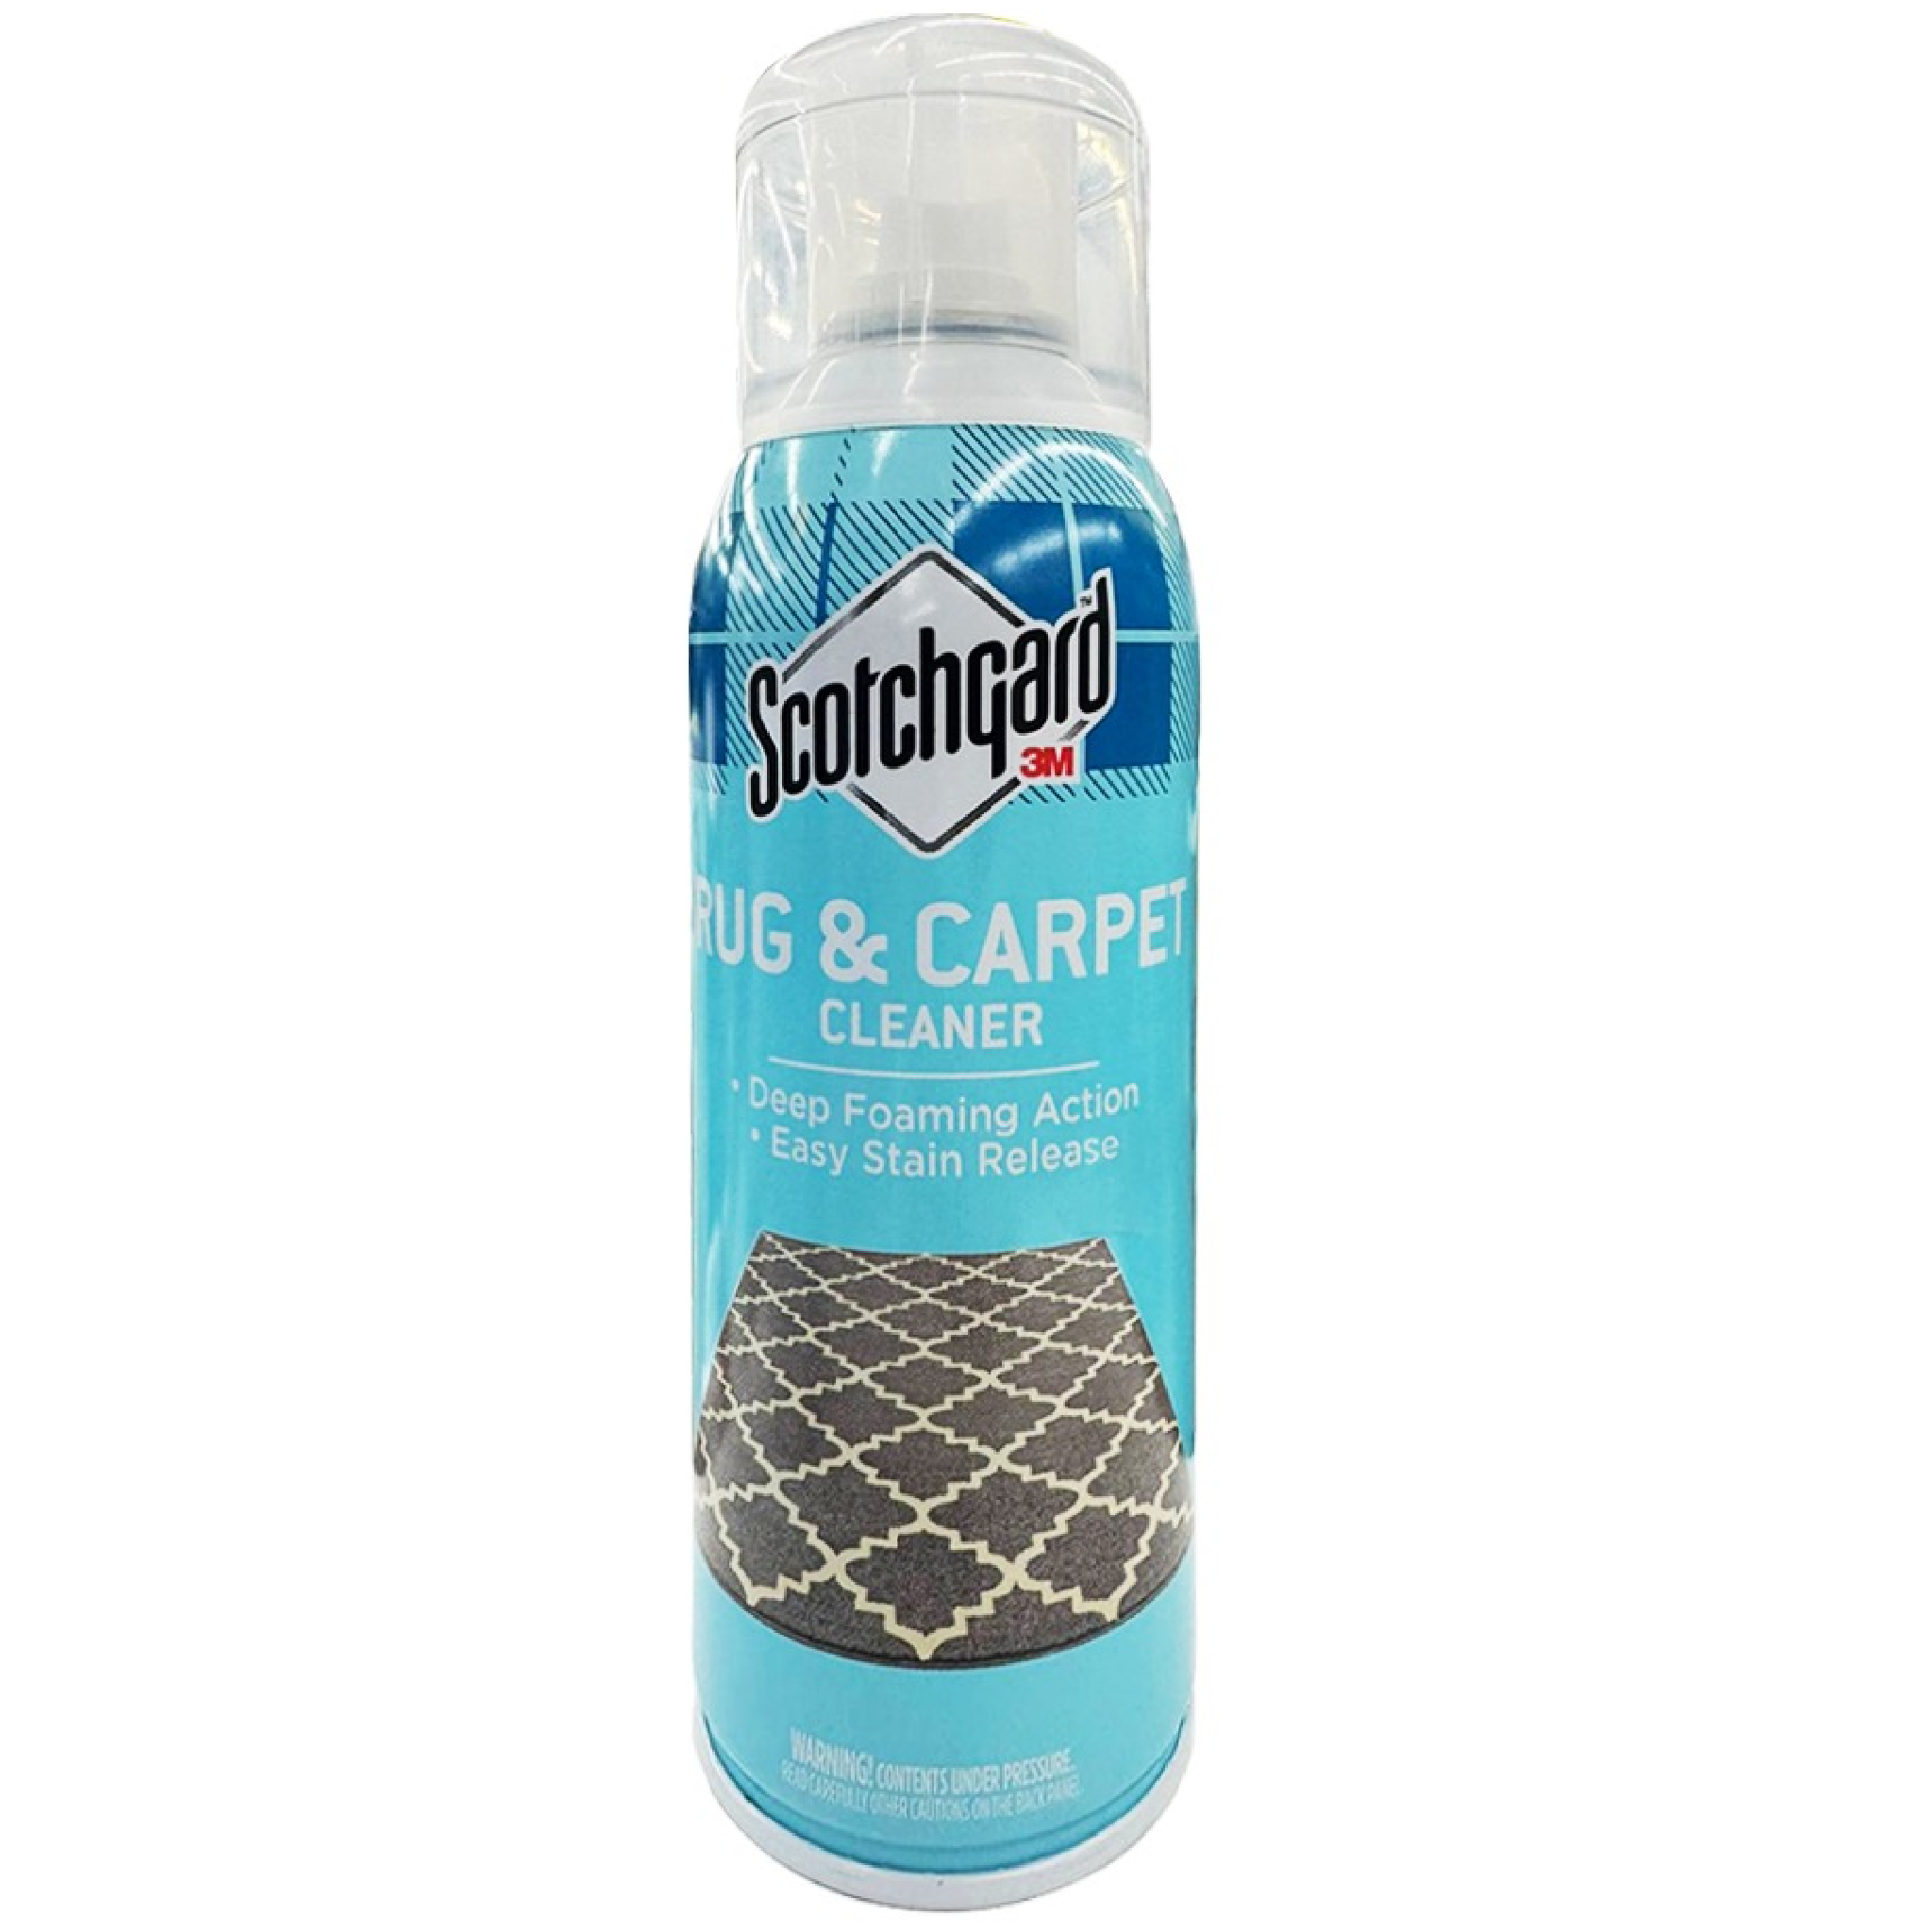 3M Scotchgard Rug & Carpet Cleaner 14oz